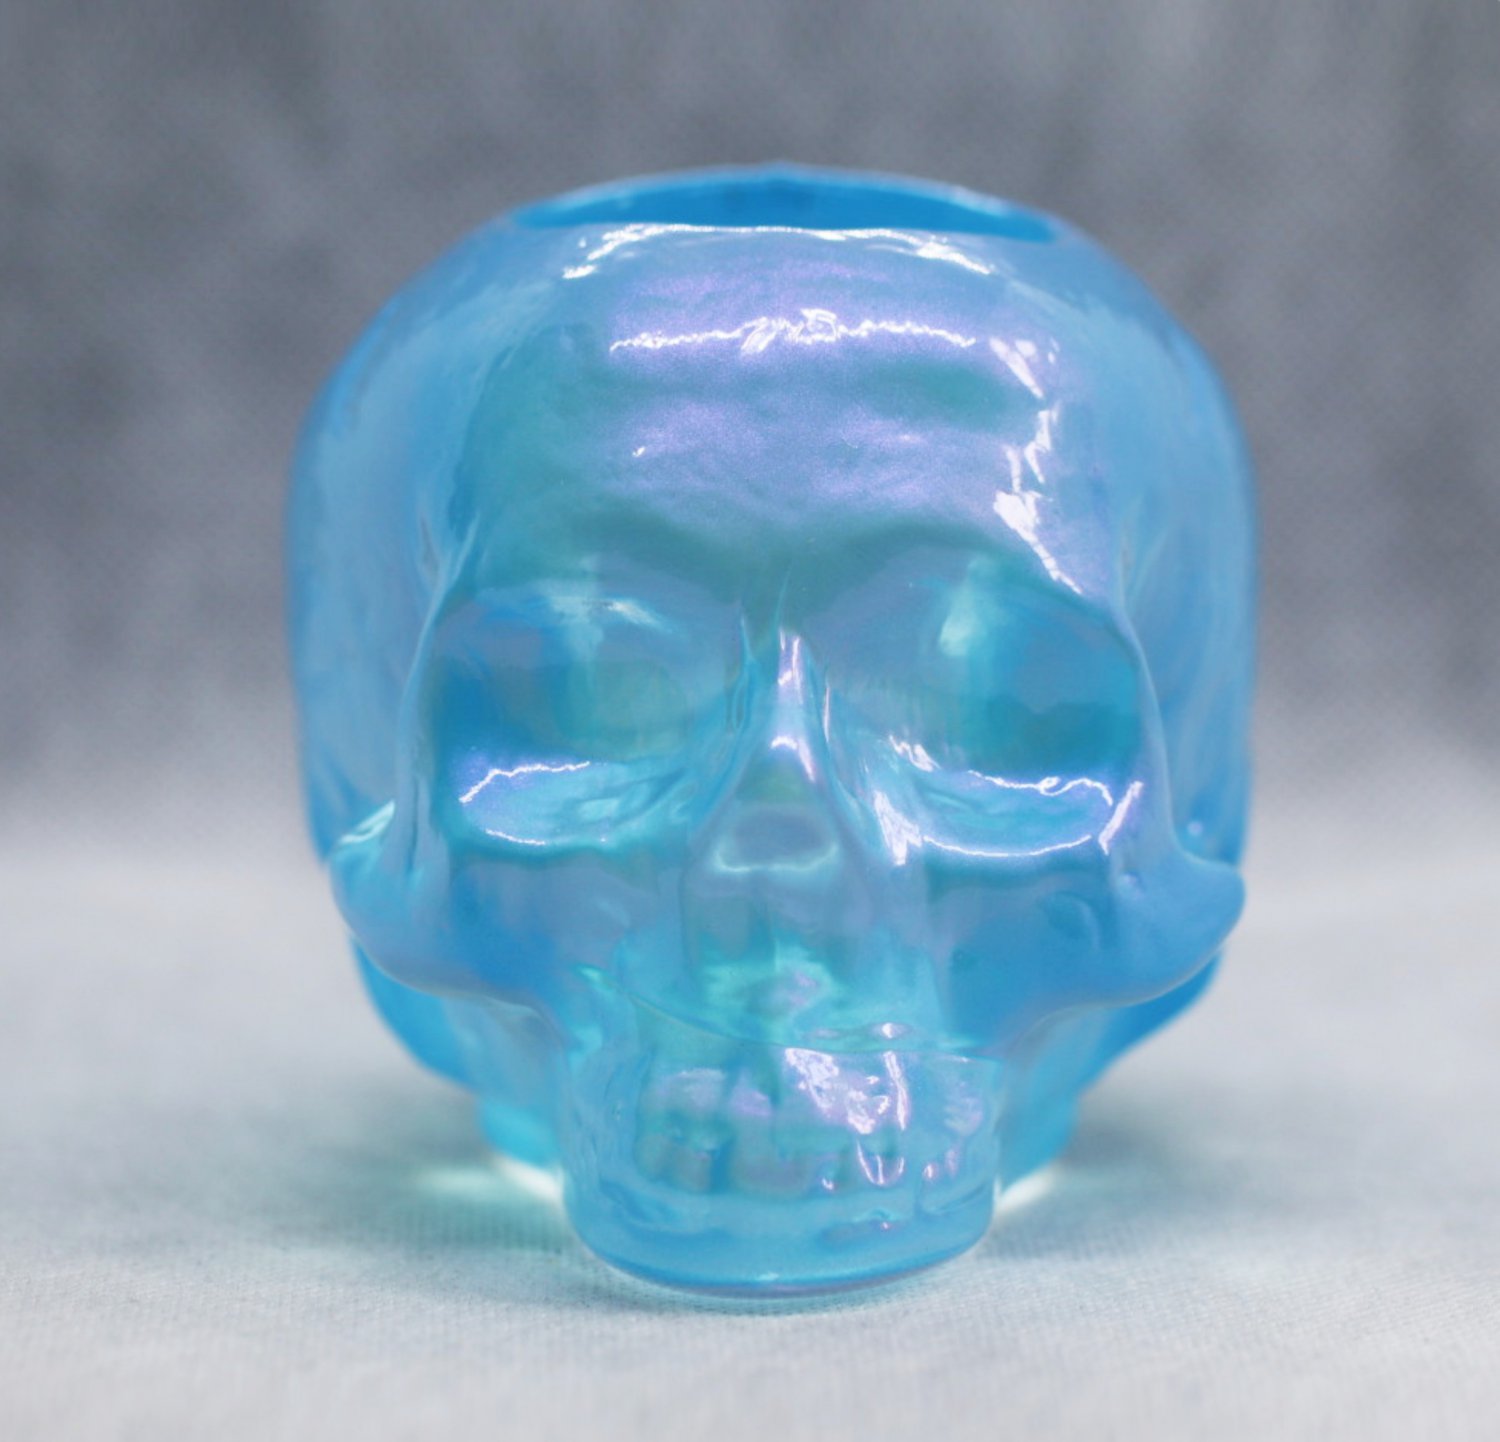 Kosta Boda Still Life Skull Light Blue Copper Candle Holde Crystal Glass Swedish Scandinavian Design